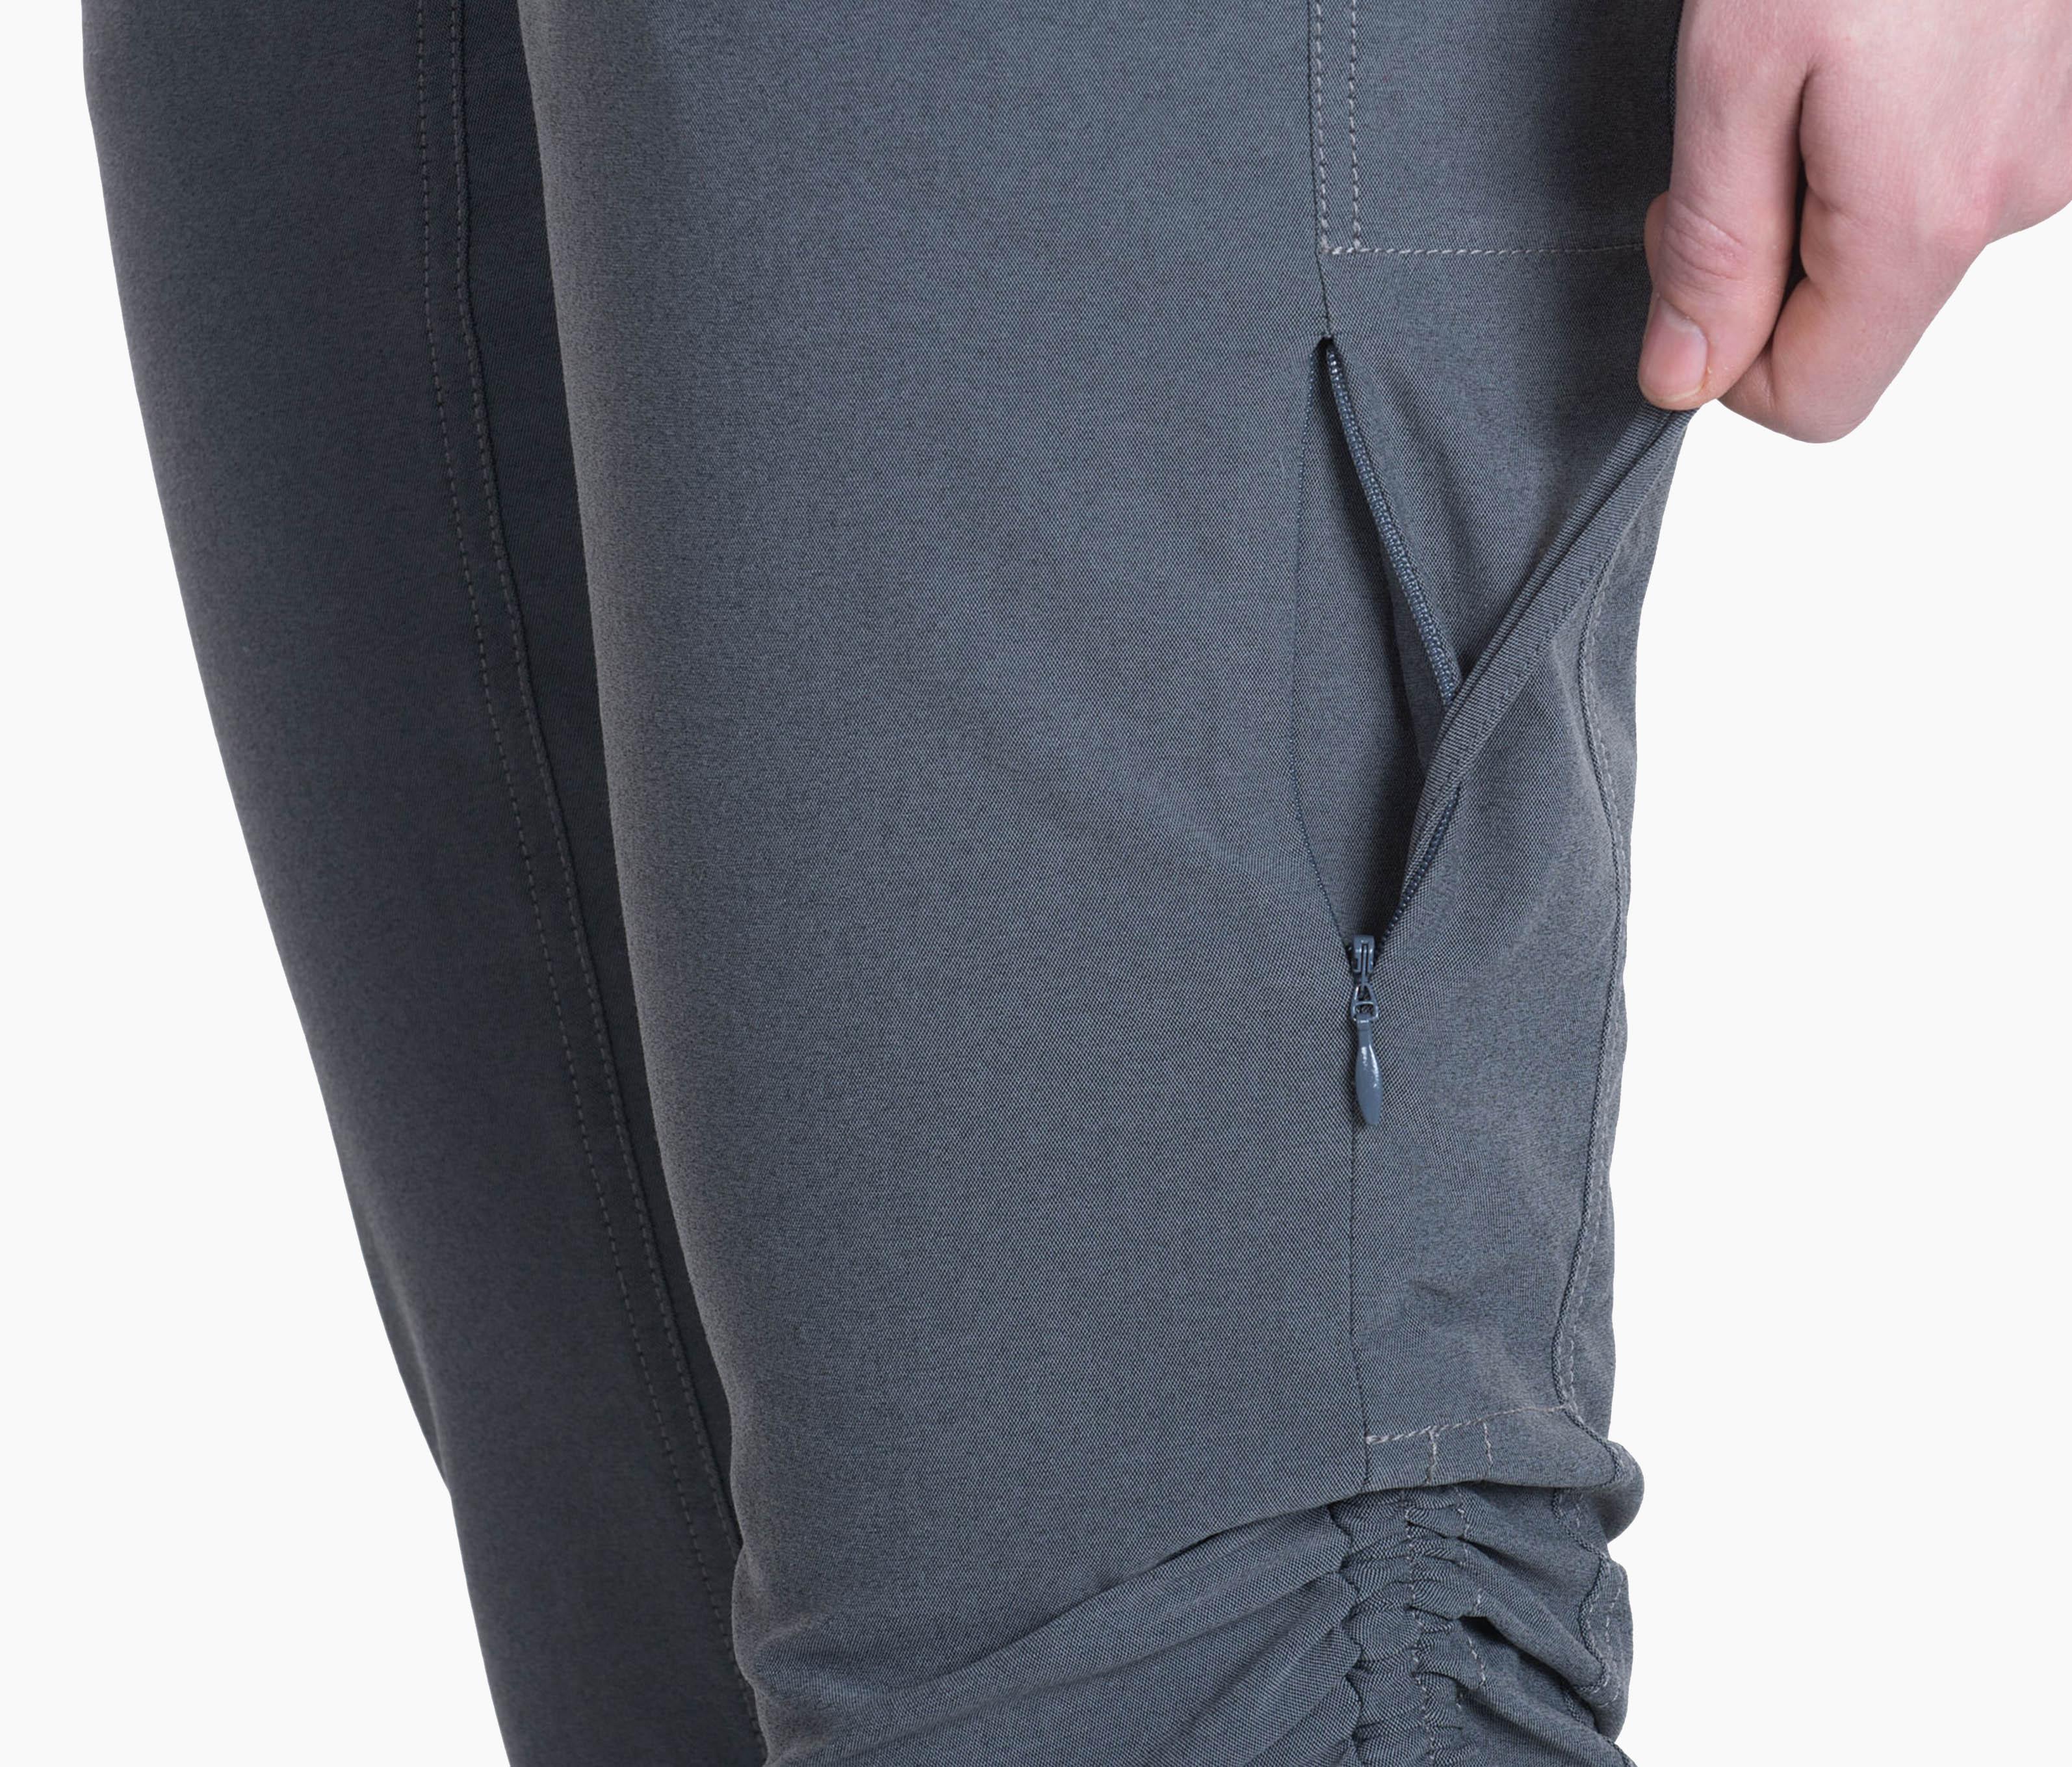 Trekr™ Pant in Women's Pants